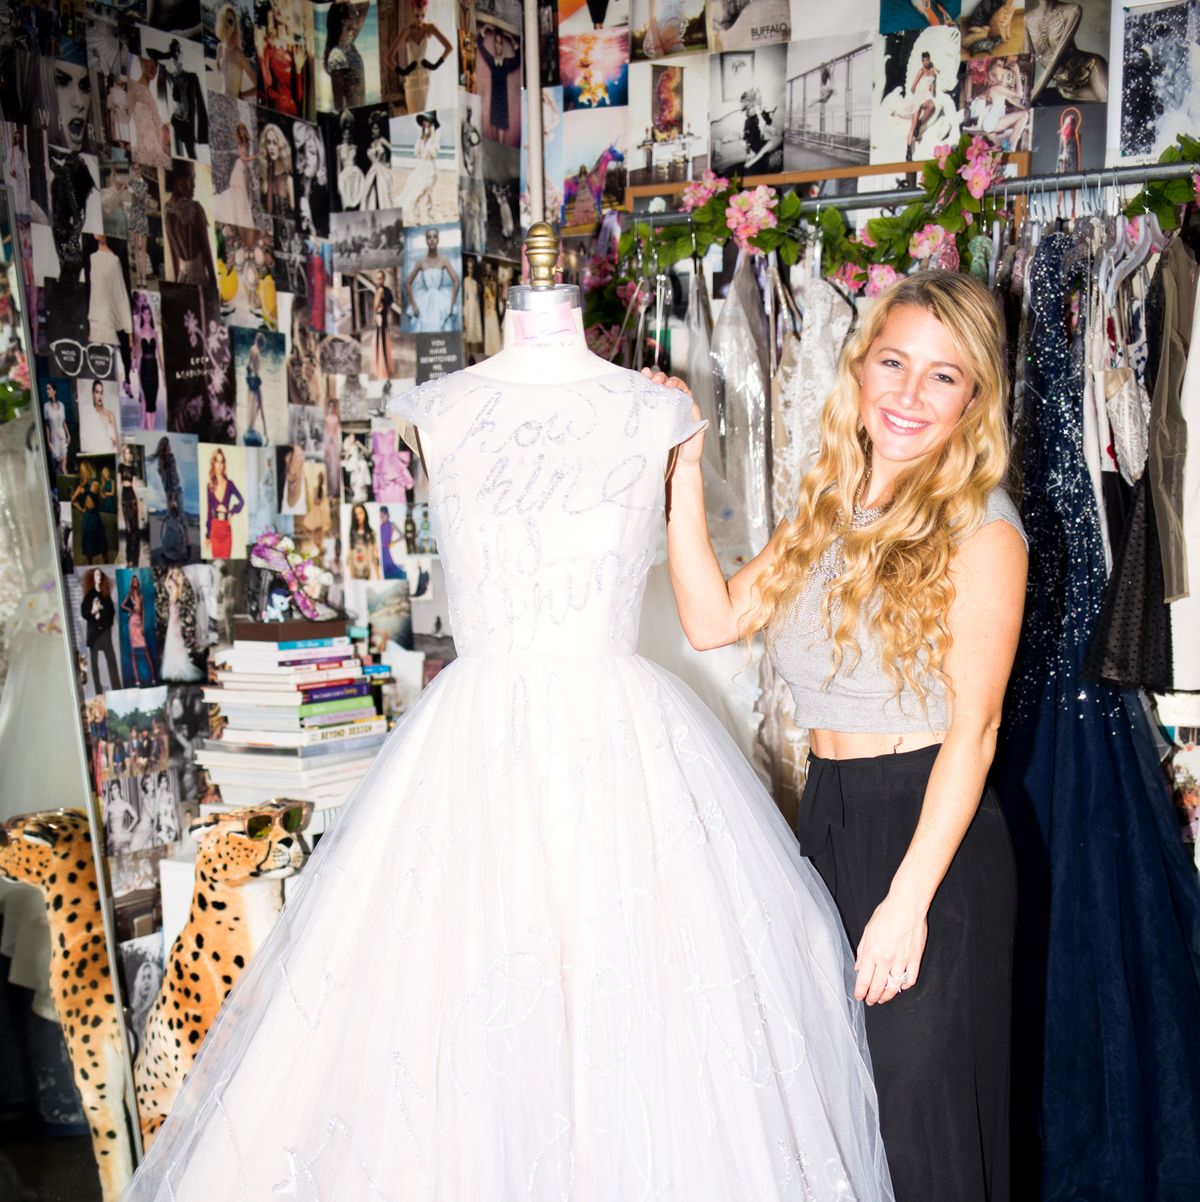 Get That Life: How I Became a Wedding Dress Designer